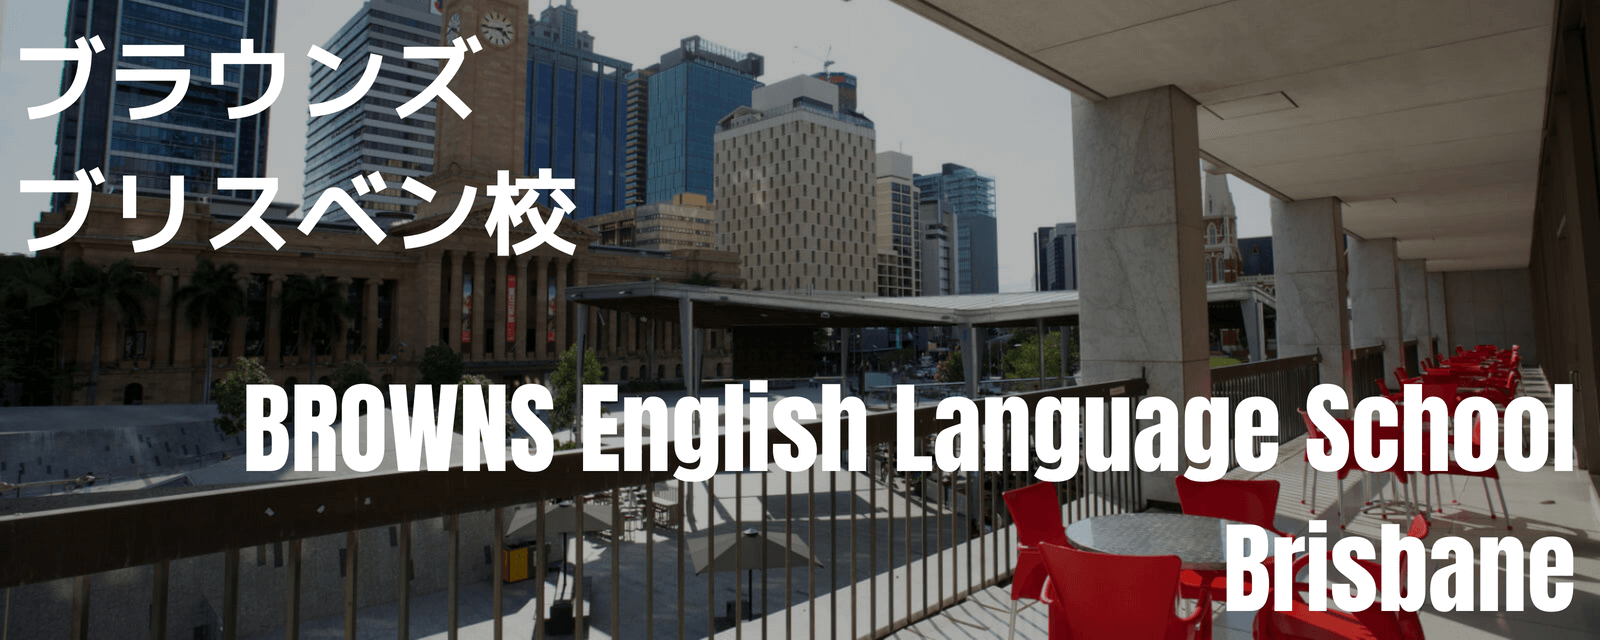 BROWNS English Language School Brisbane